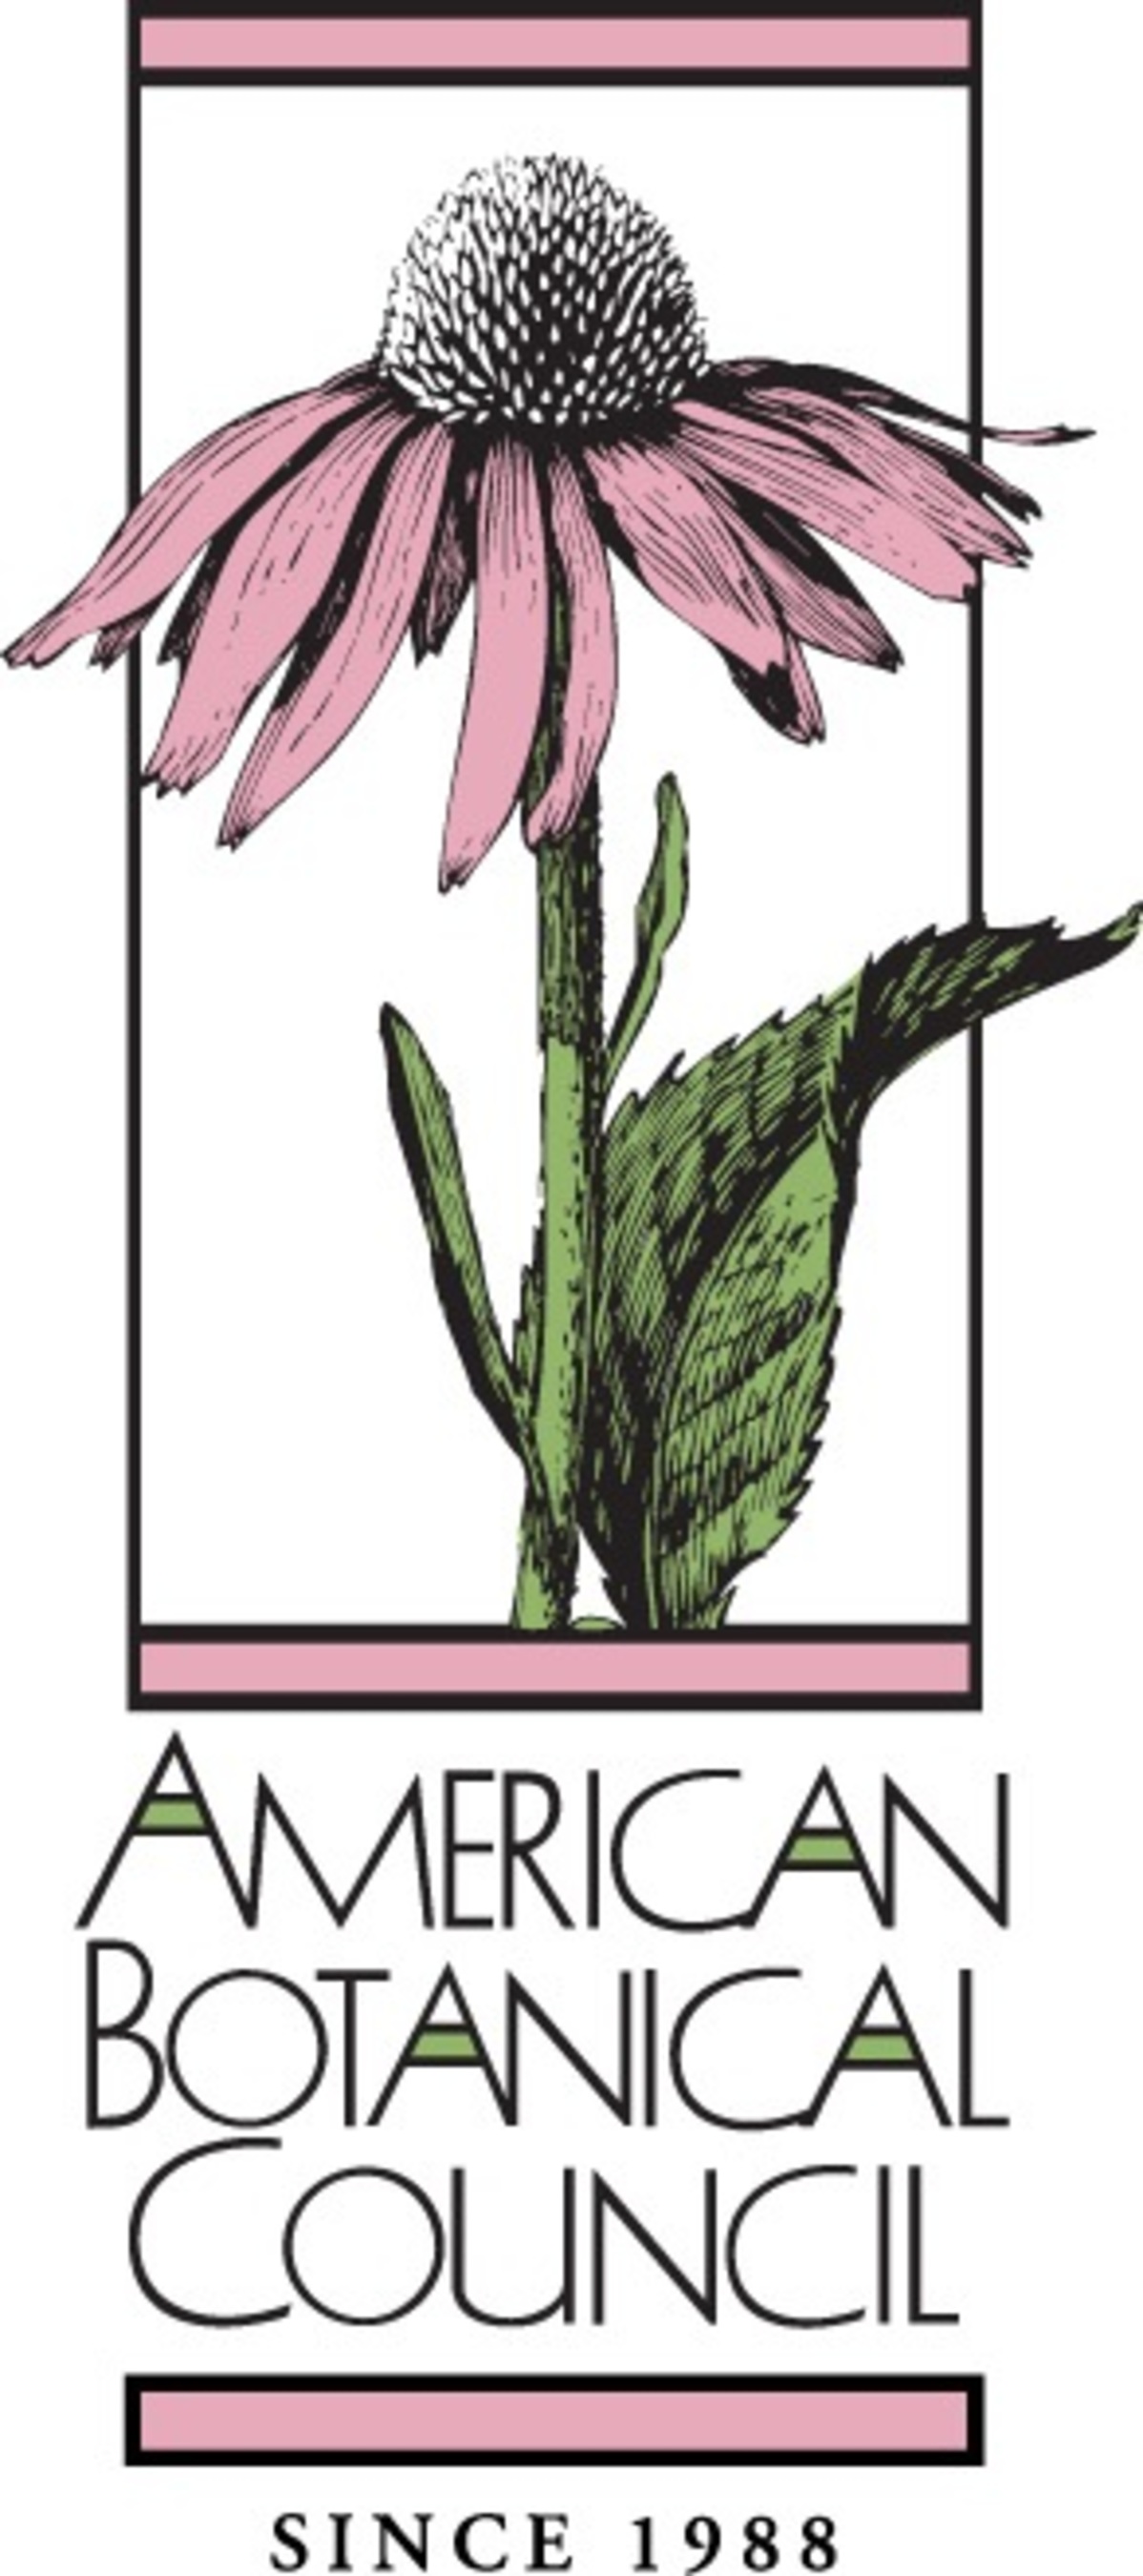 American Botanical Council Logo